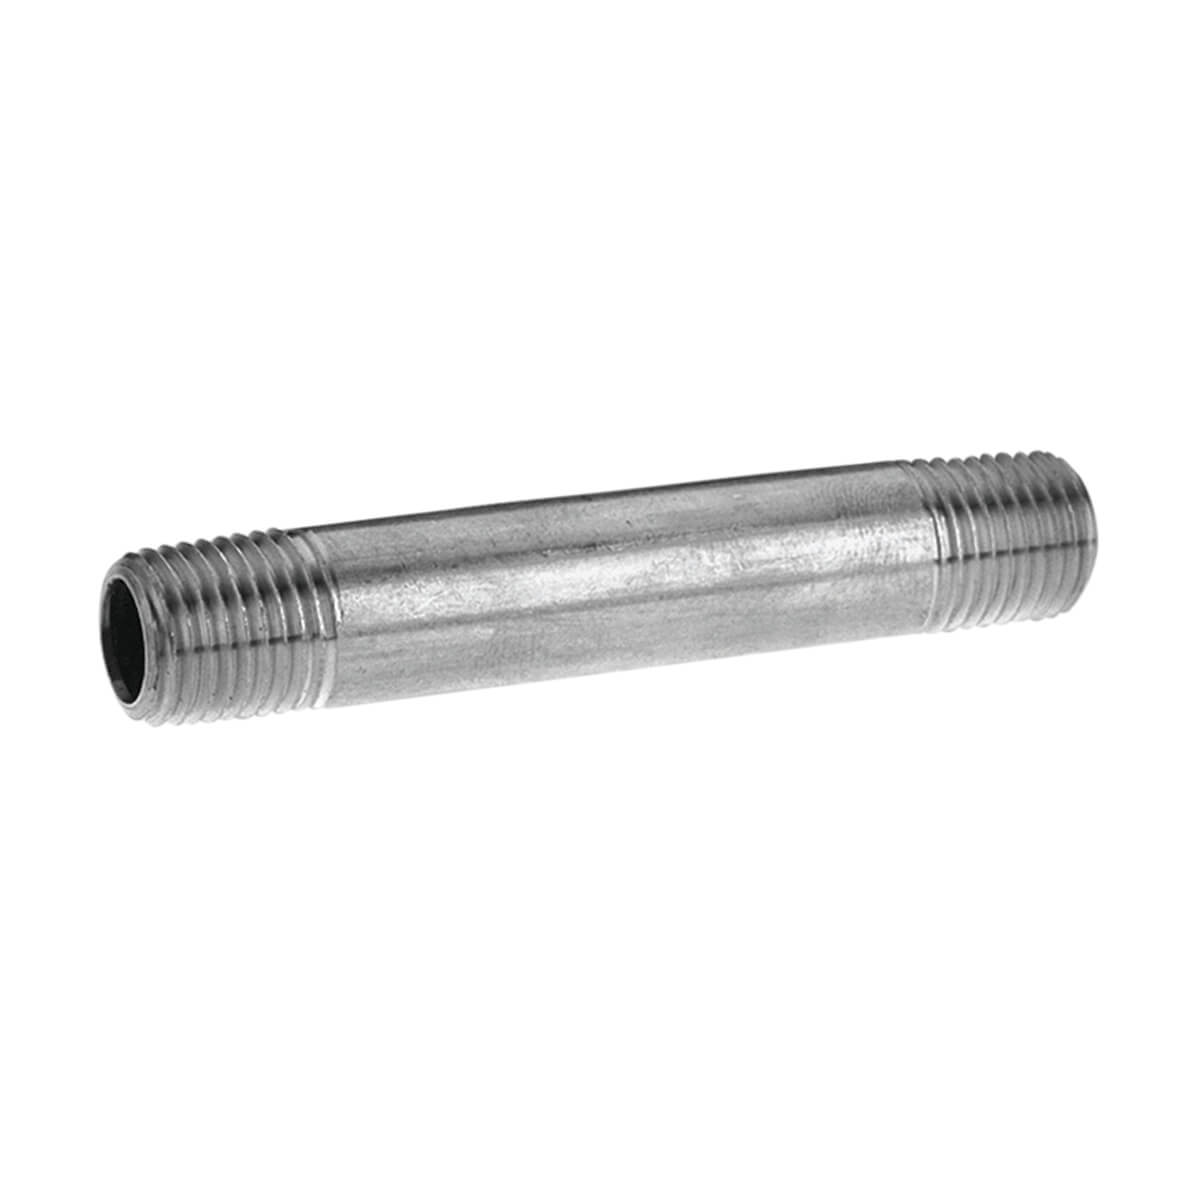 Pipe Nipple Galvanized Steel - 1-1/4-in x 4-1/2-in